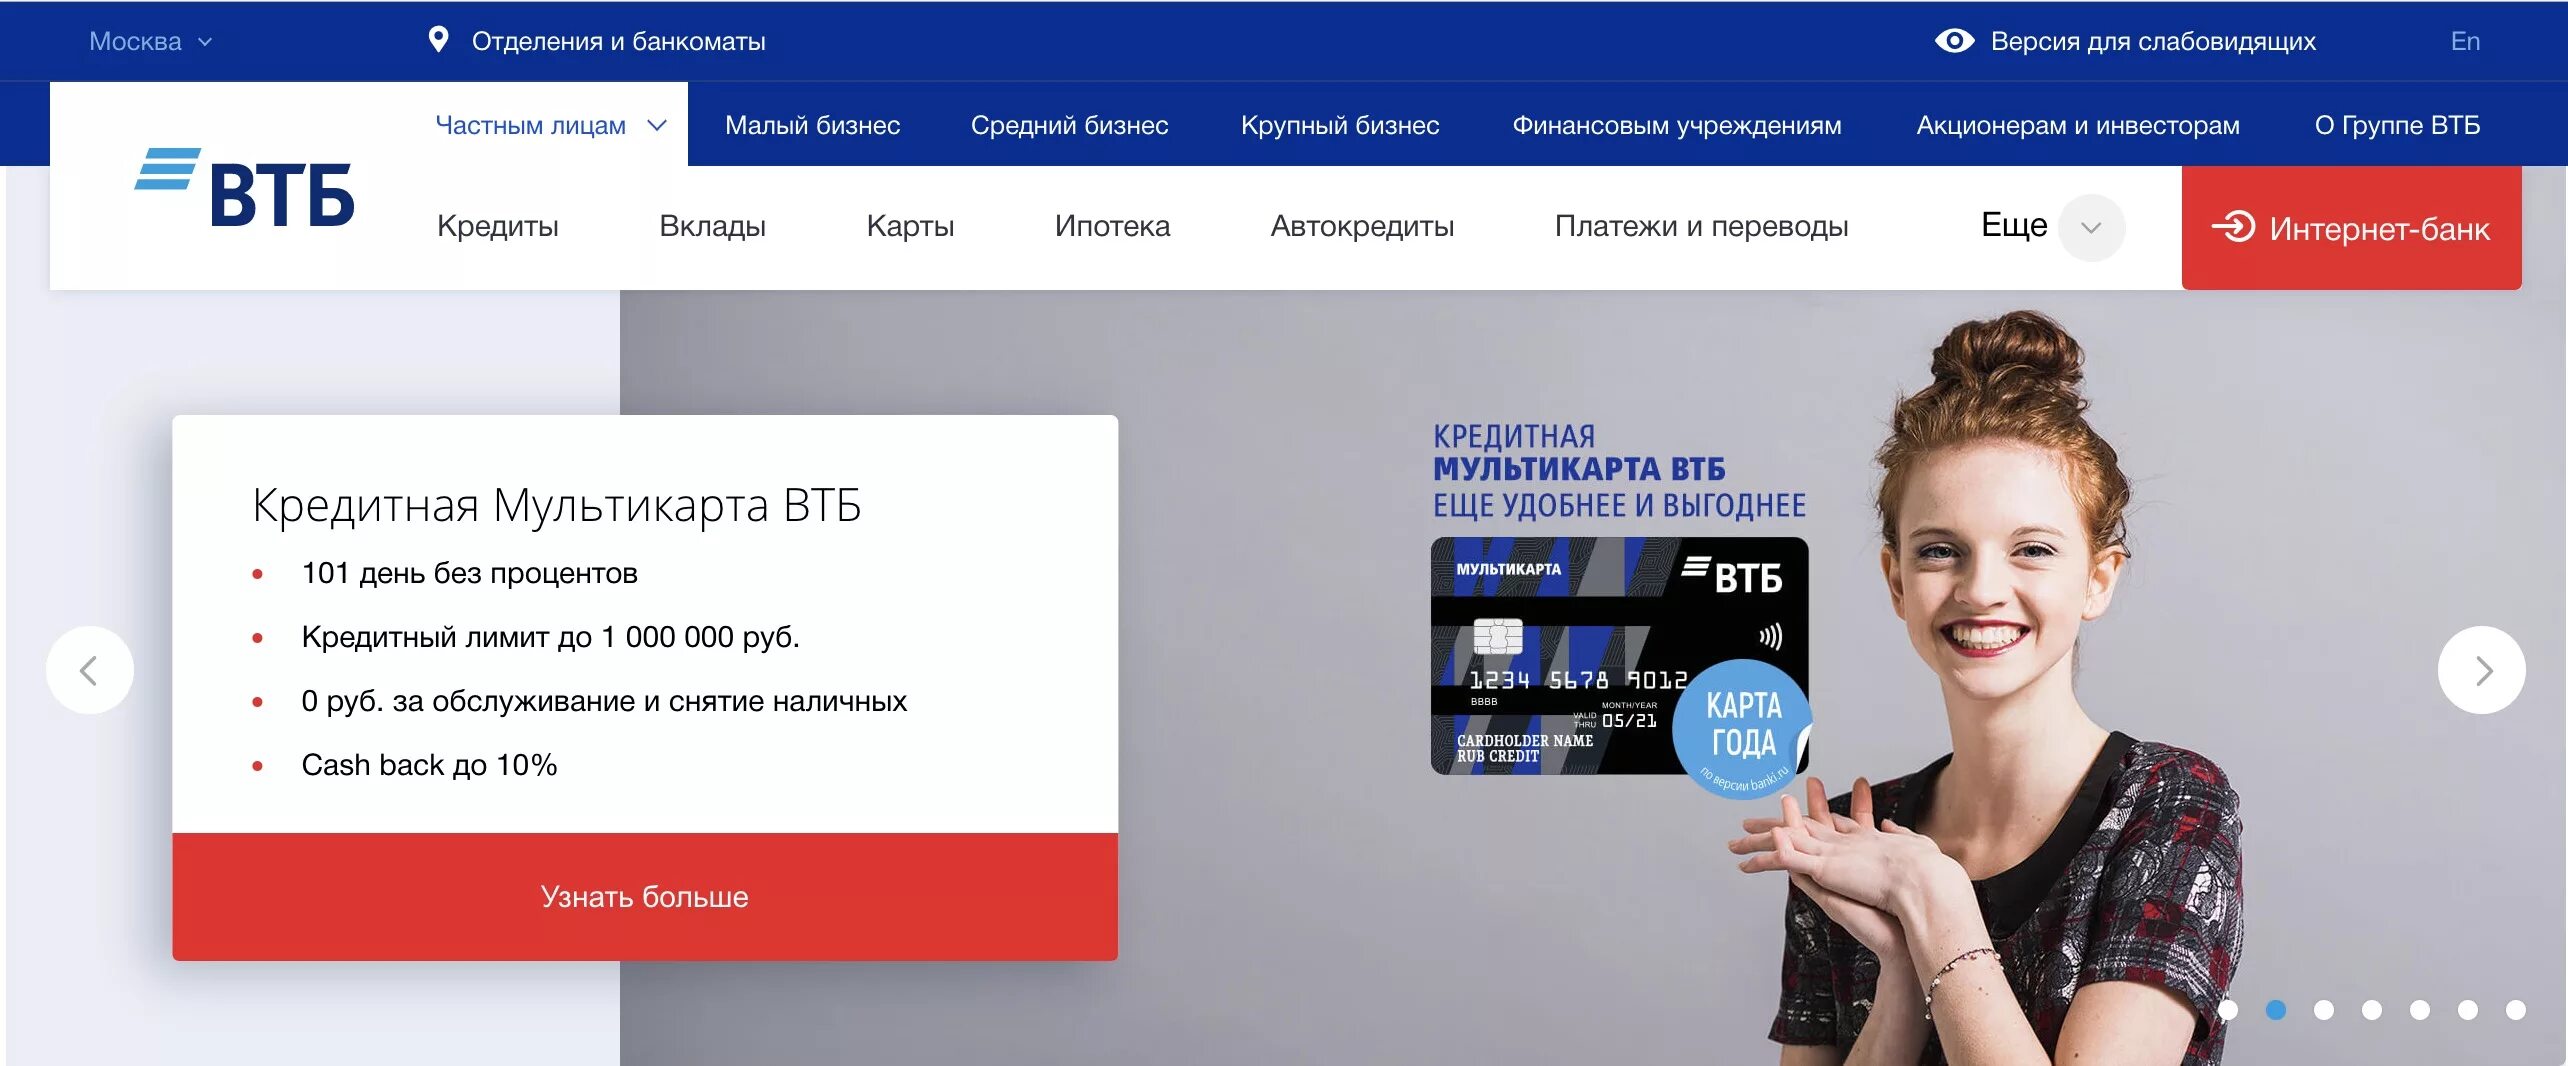 Сайт банка втб новосибирск. ВТБ банка. Лицо банка ВТБ 24.